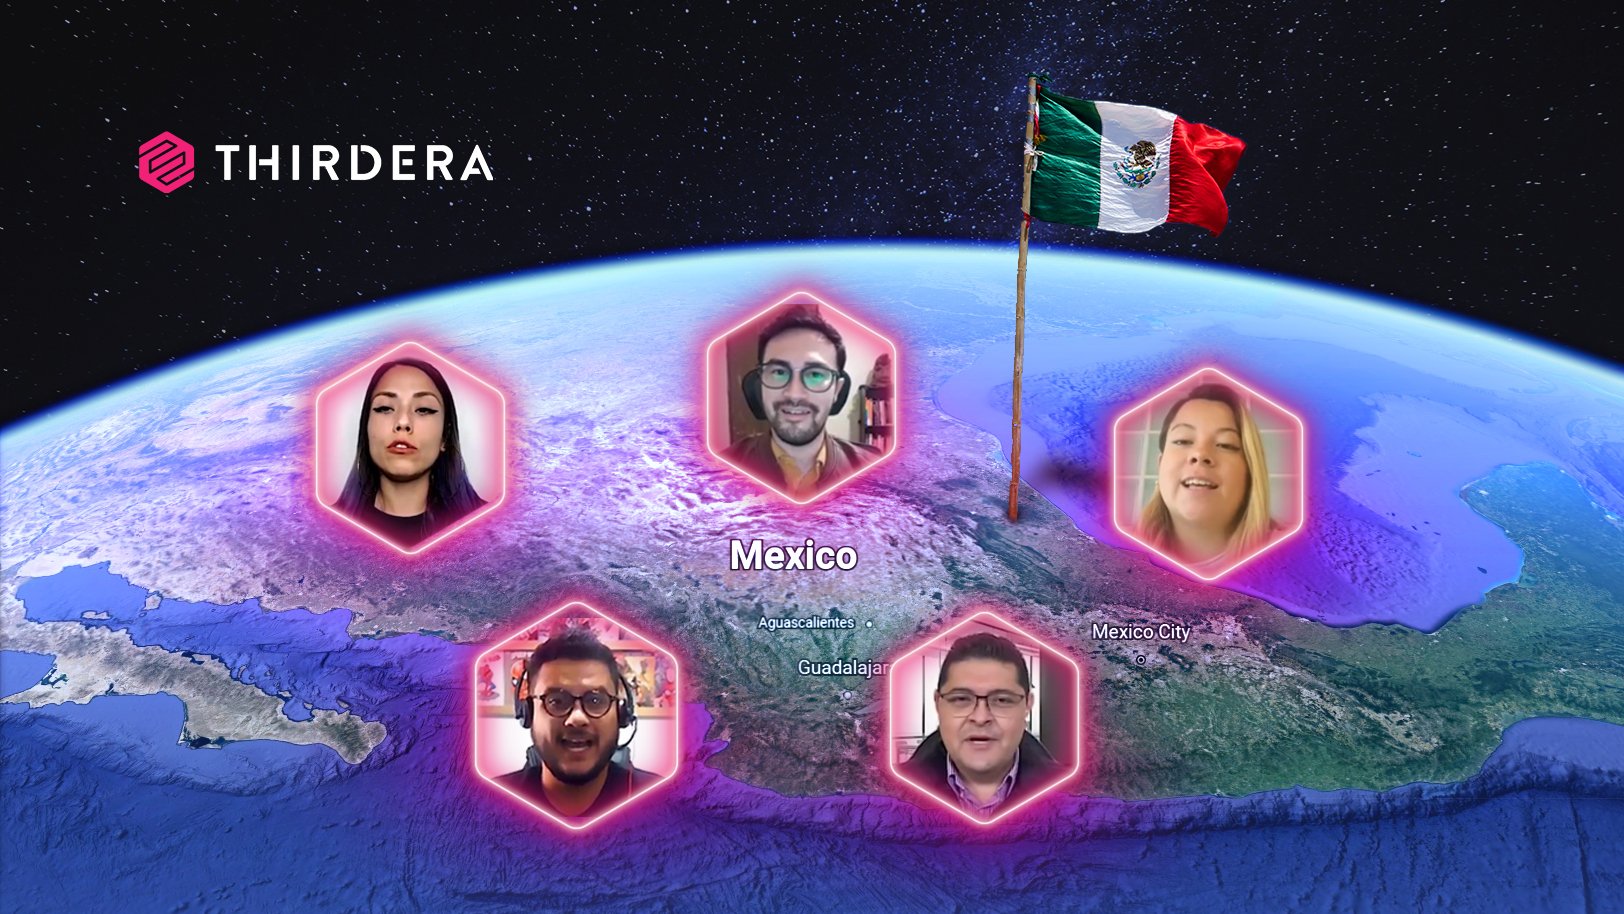 Eranauts in Mexico: Why Thirdera